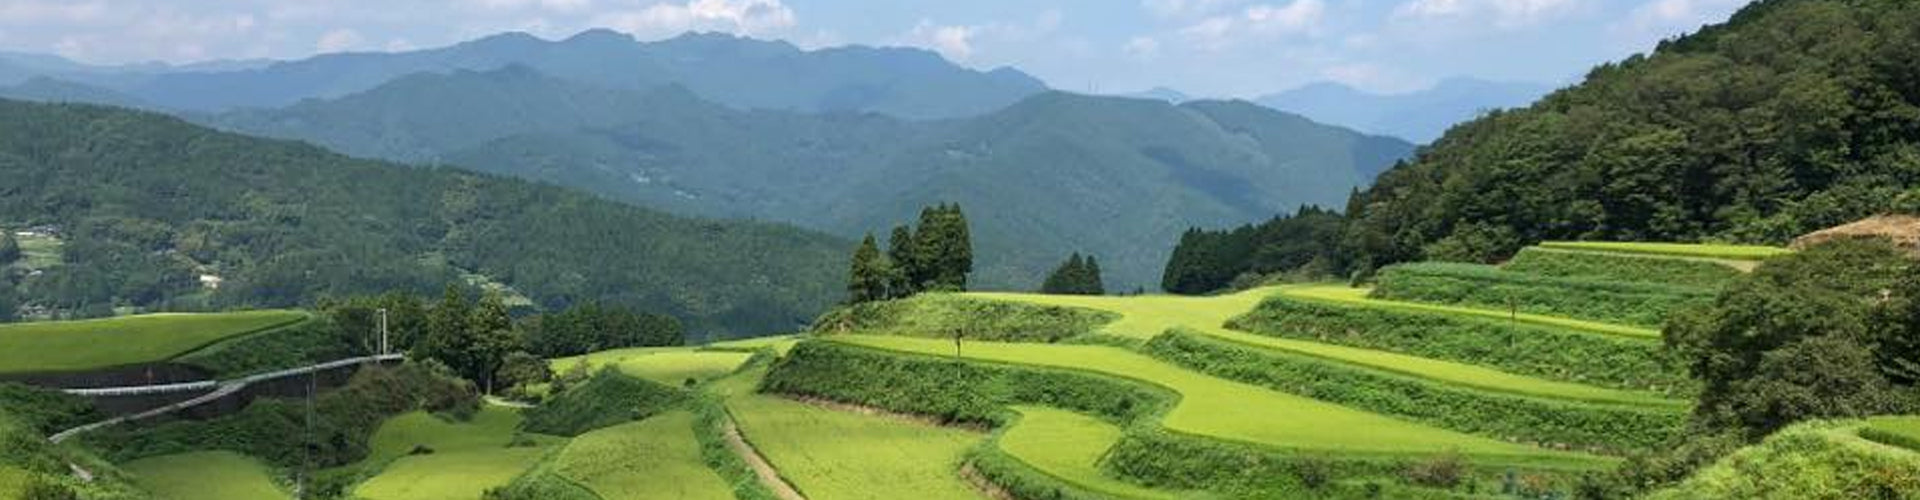 Sake Rice Fields in Japan